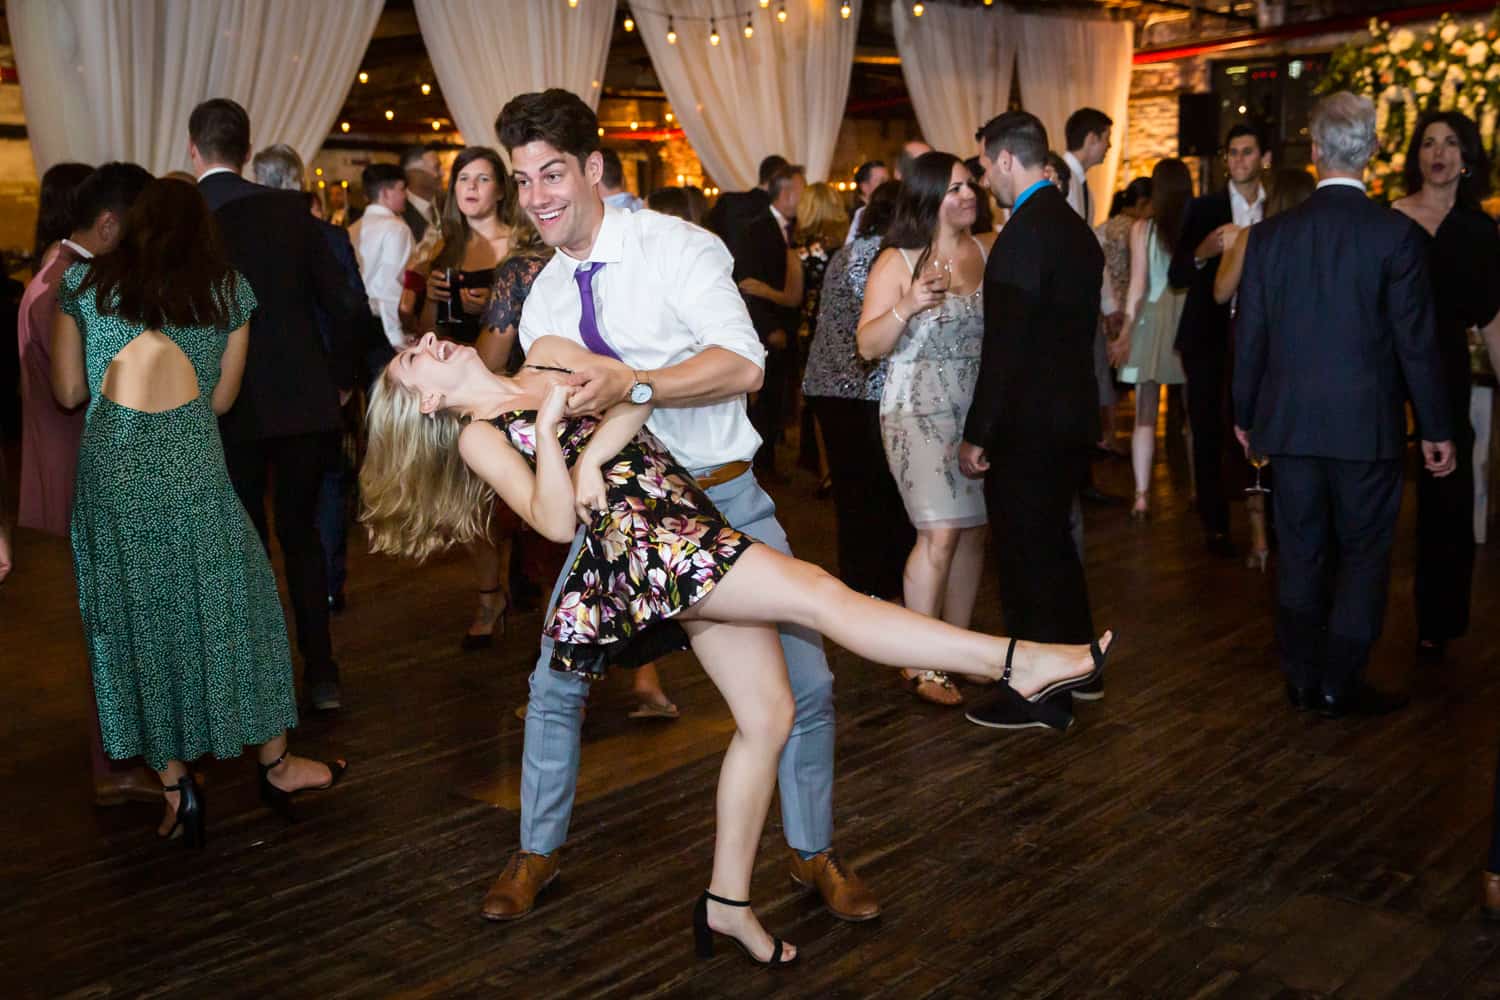 Greenpoint Loft wedding photos of man dipping woman on dance floor